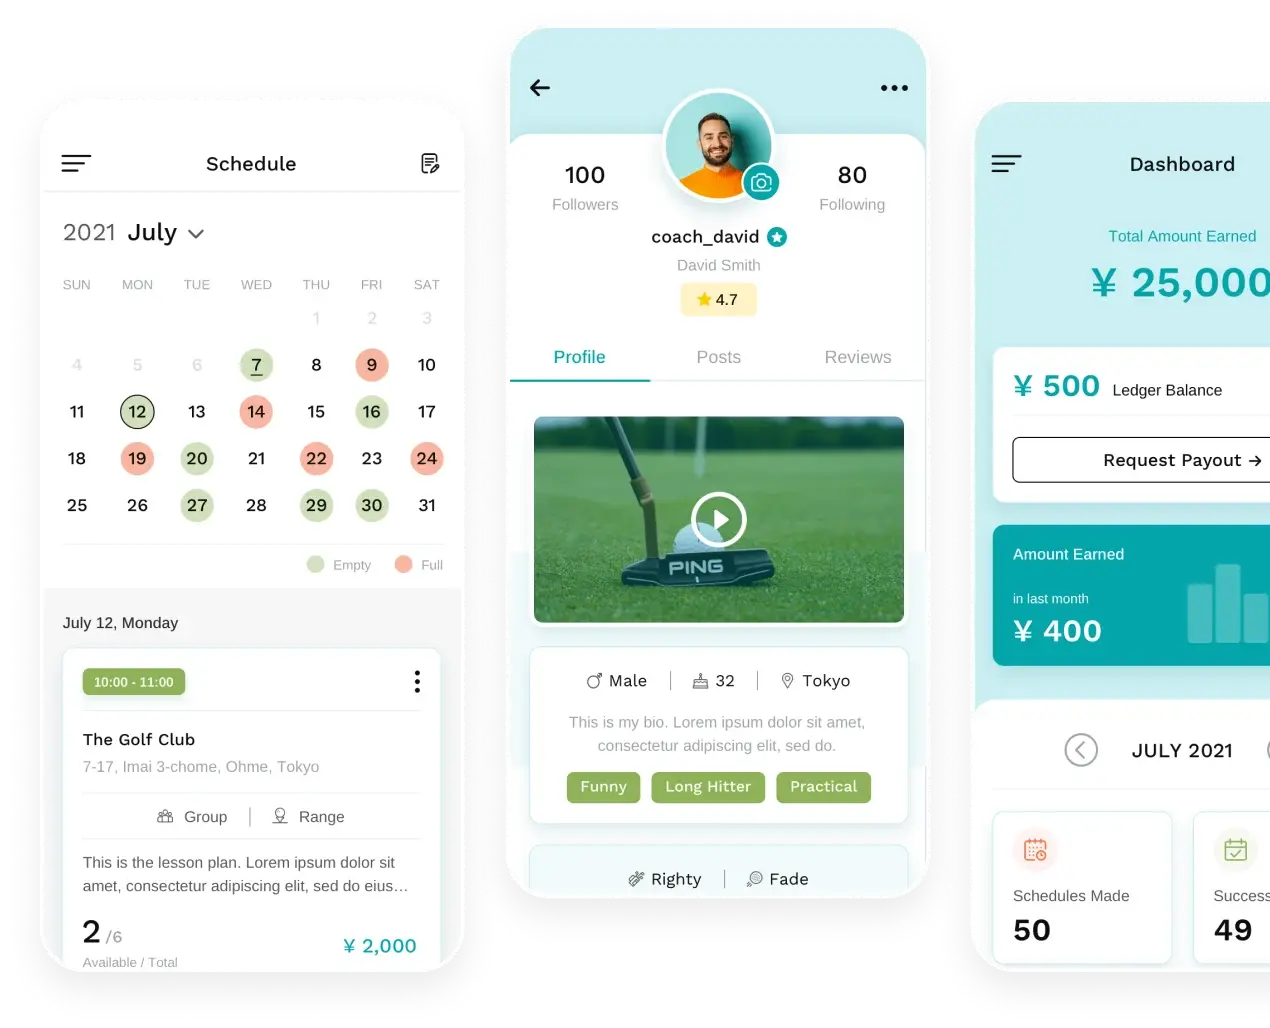 Techuz portfolio Super-app for golf players, coaches, and facilities